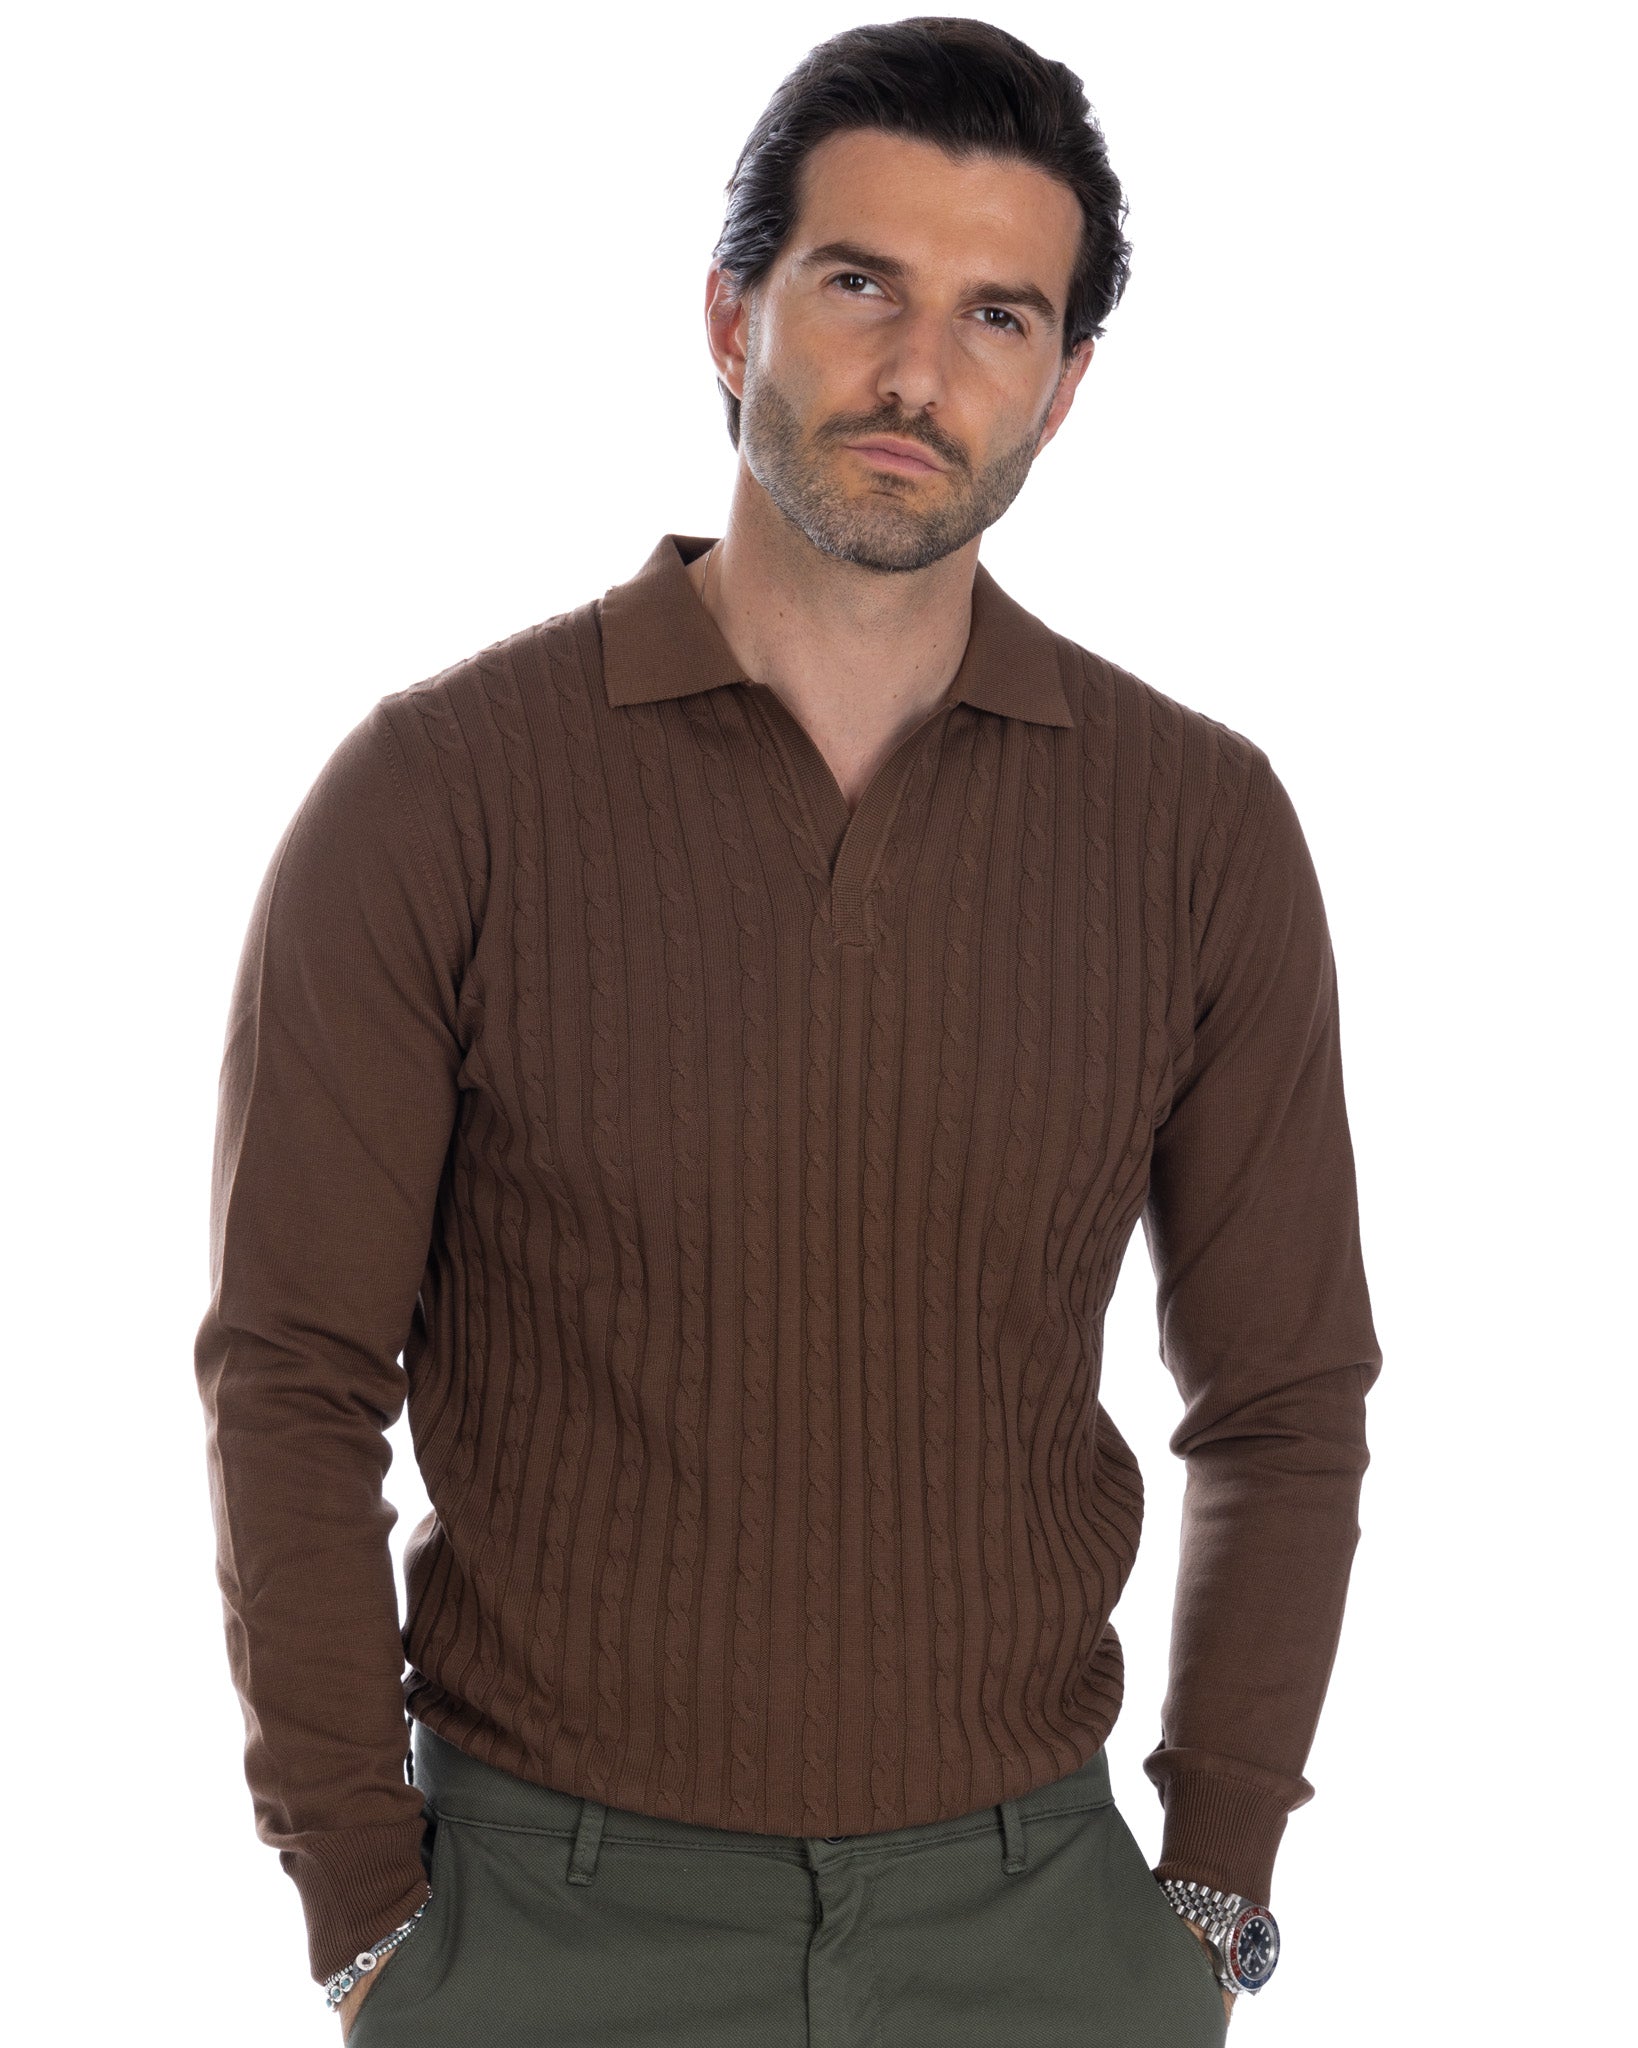 Matteo - tobacco sweater with braids